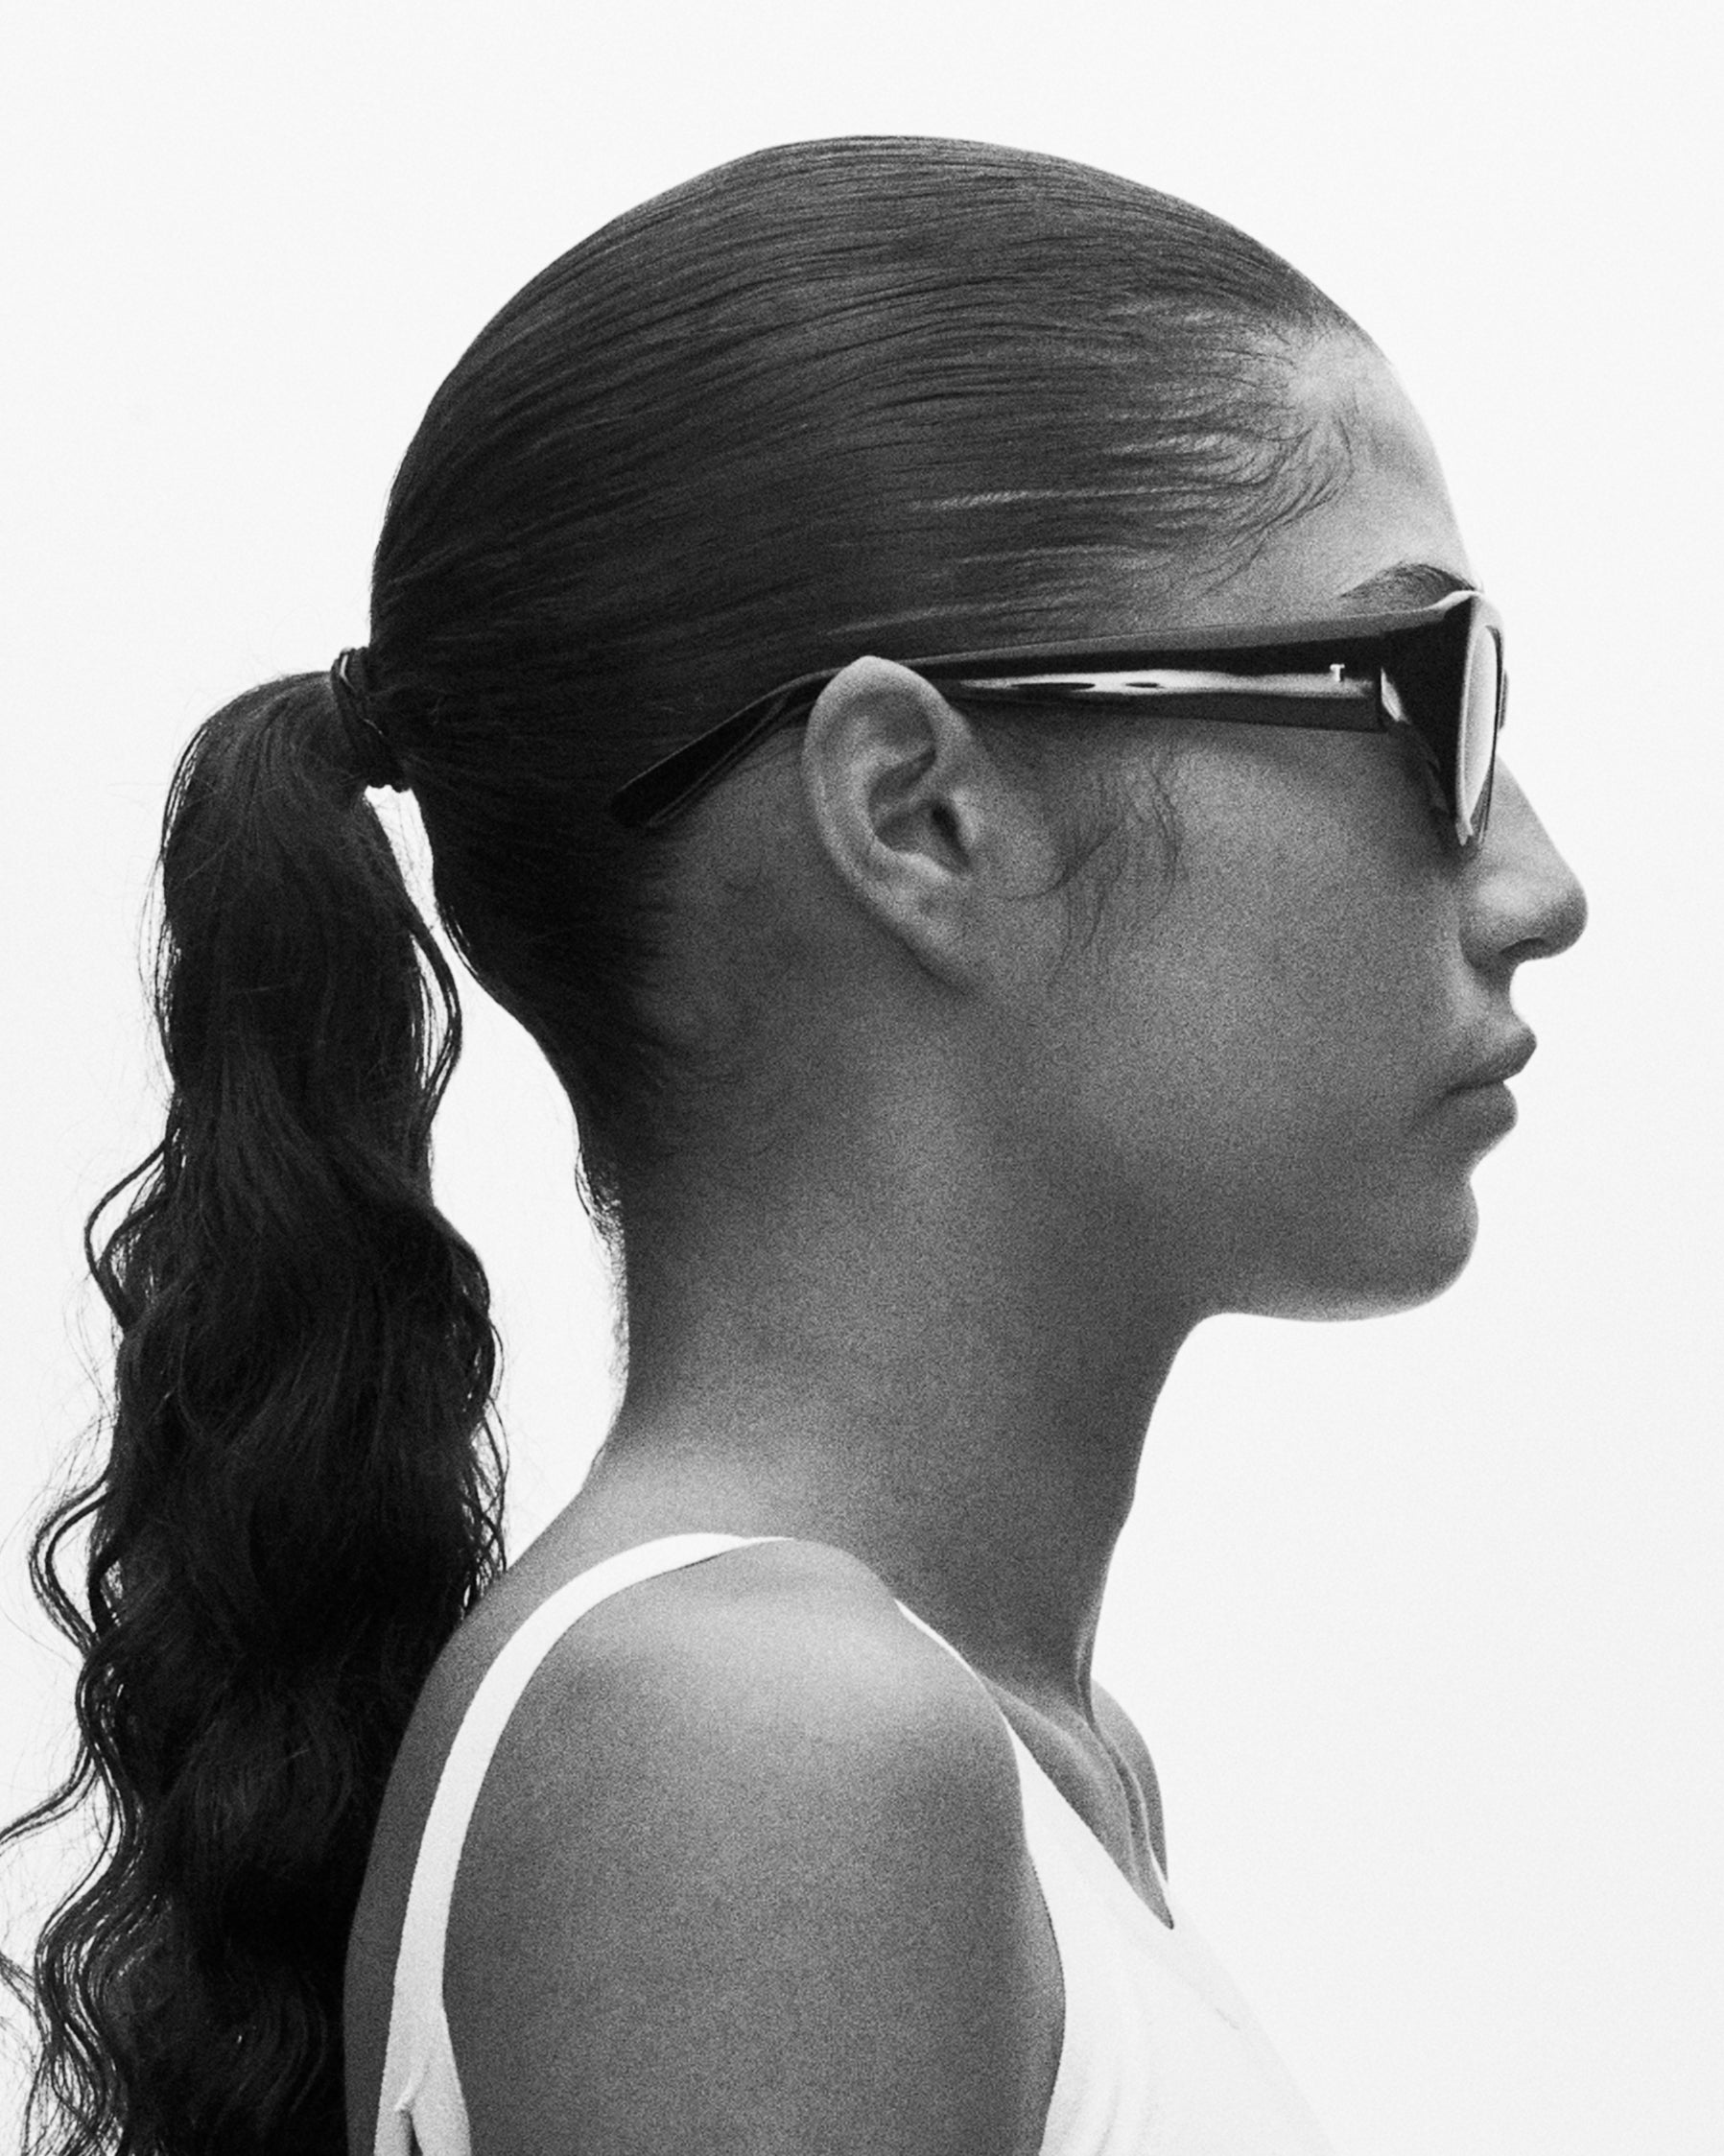 model wearing sunglasses, facing rightward